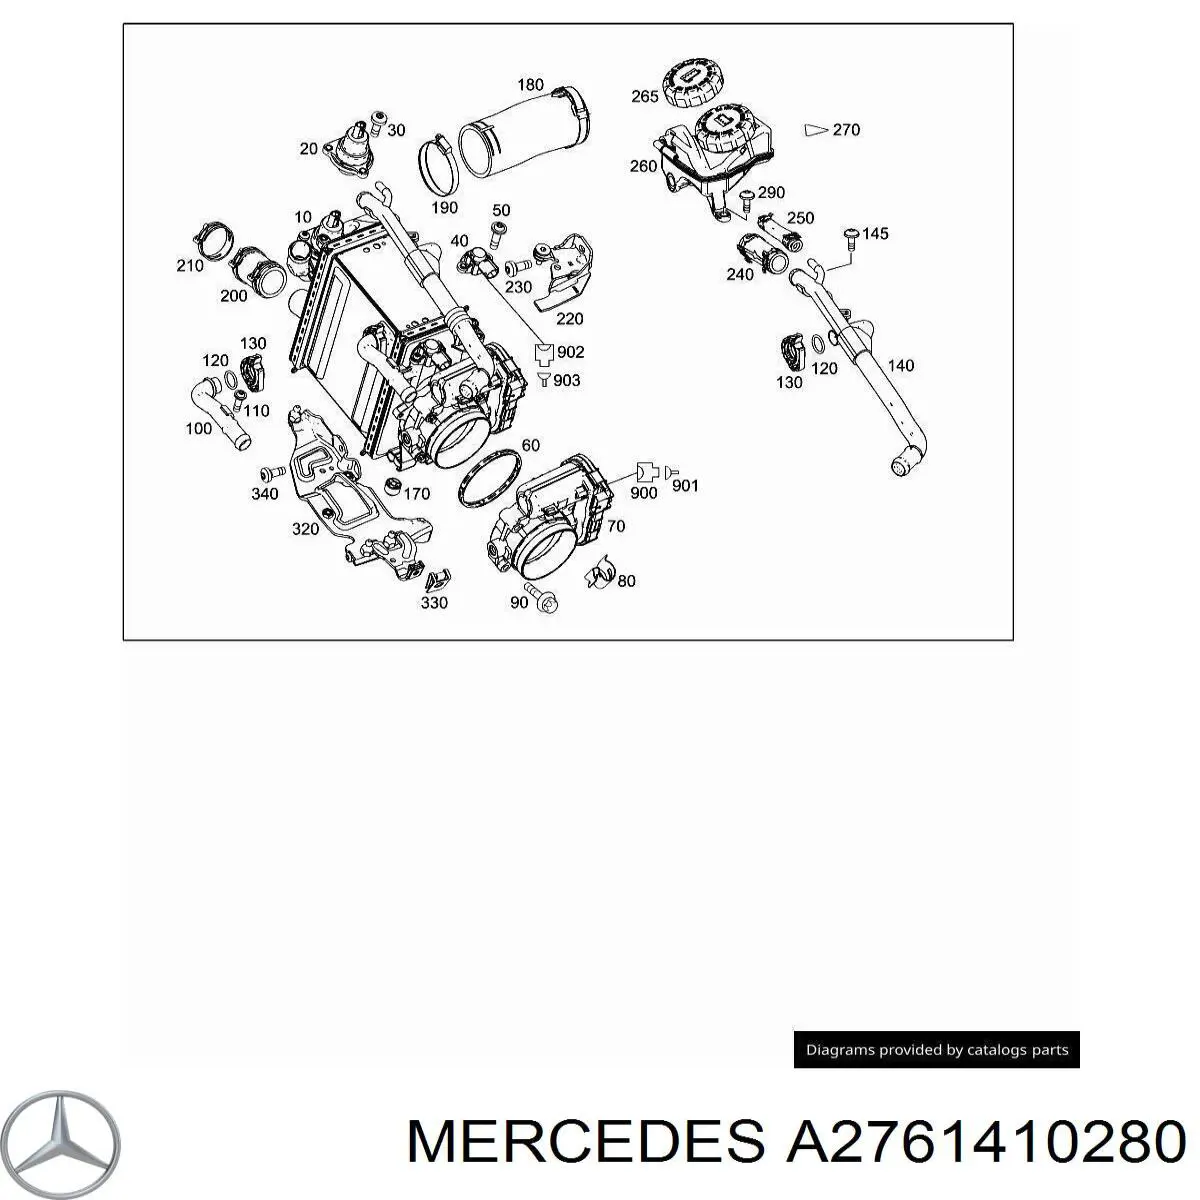 Junta cuerpo mariposa para Mercedes G (W463)